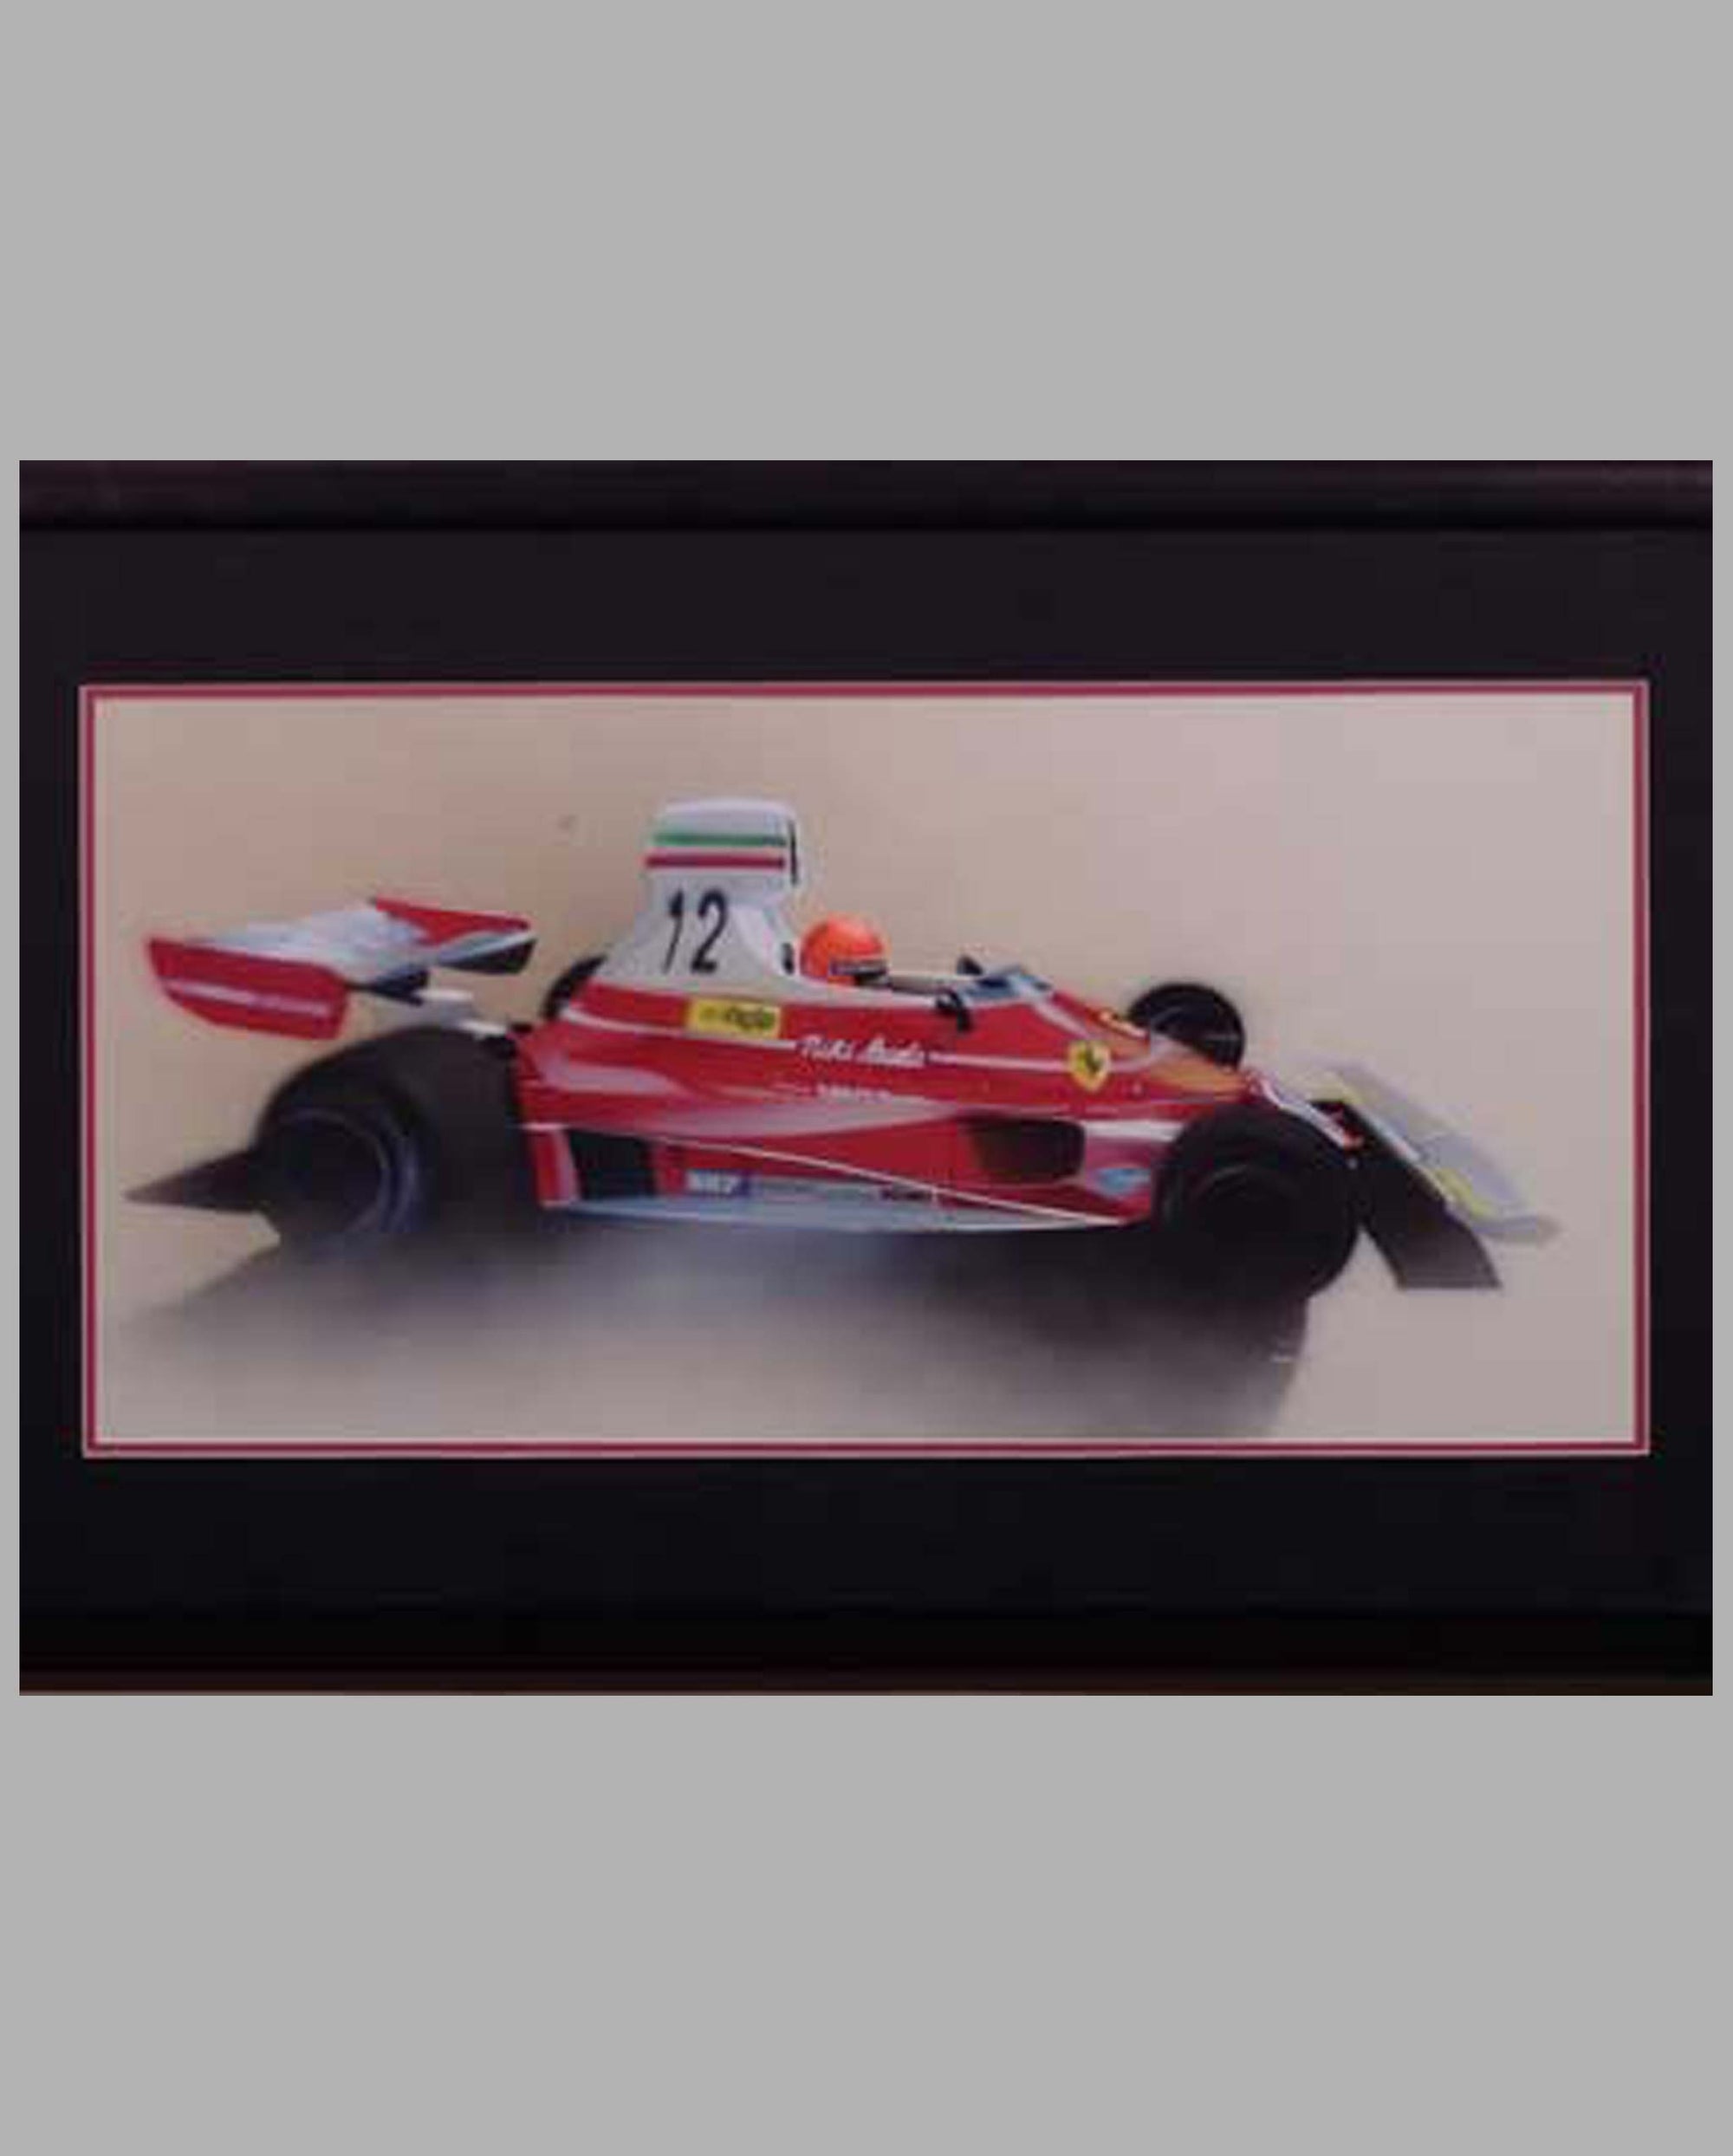 Niki Lauda’s Ferrari 312T painting by Thierry Thompson 